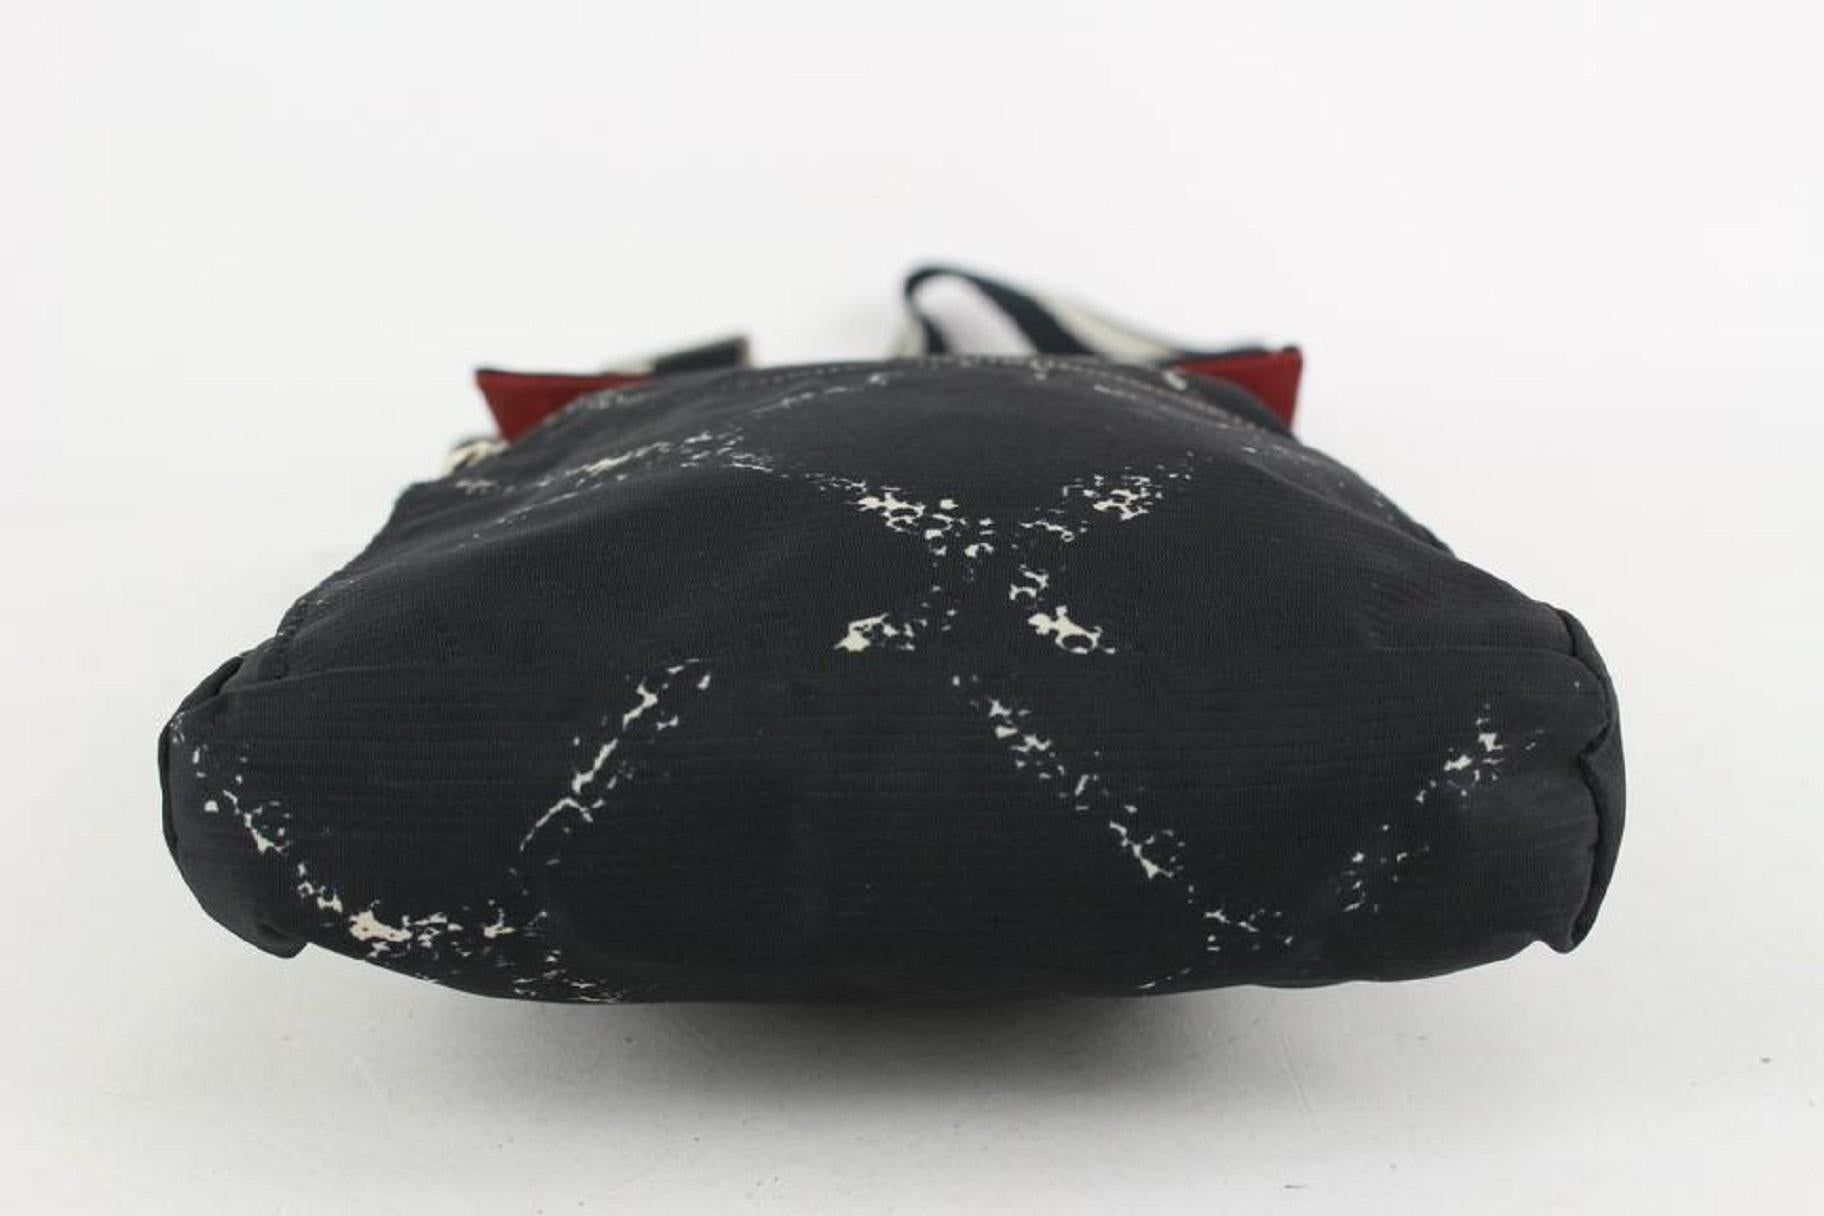 Chanel Black New Lin Belt Bag Fanny Pack Waist Pouch 923ca5 3